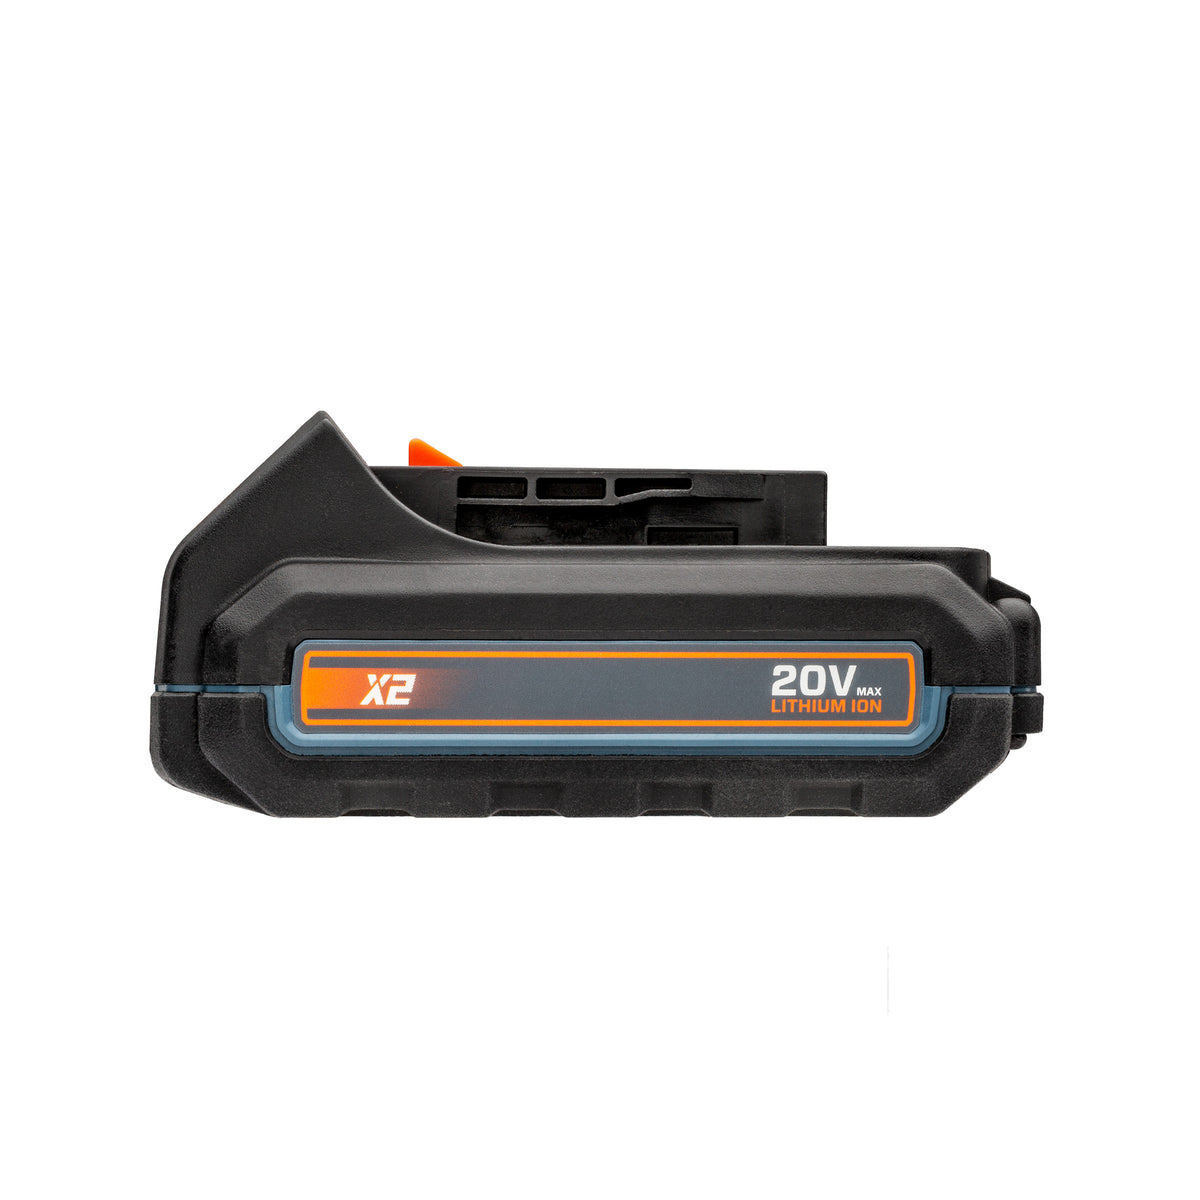 2.5 Ah 20V Battery and Charger Kit - S2K0B1-01-VK – SENIX Tools